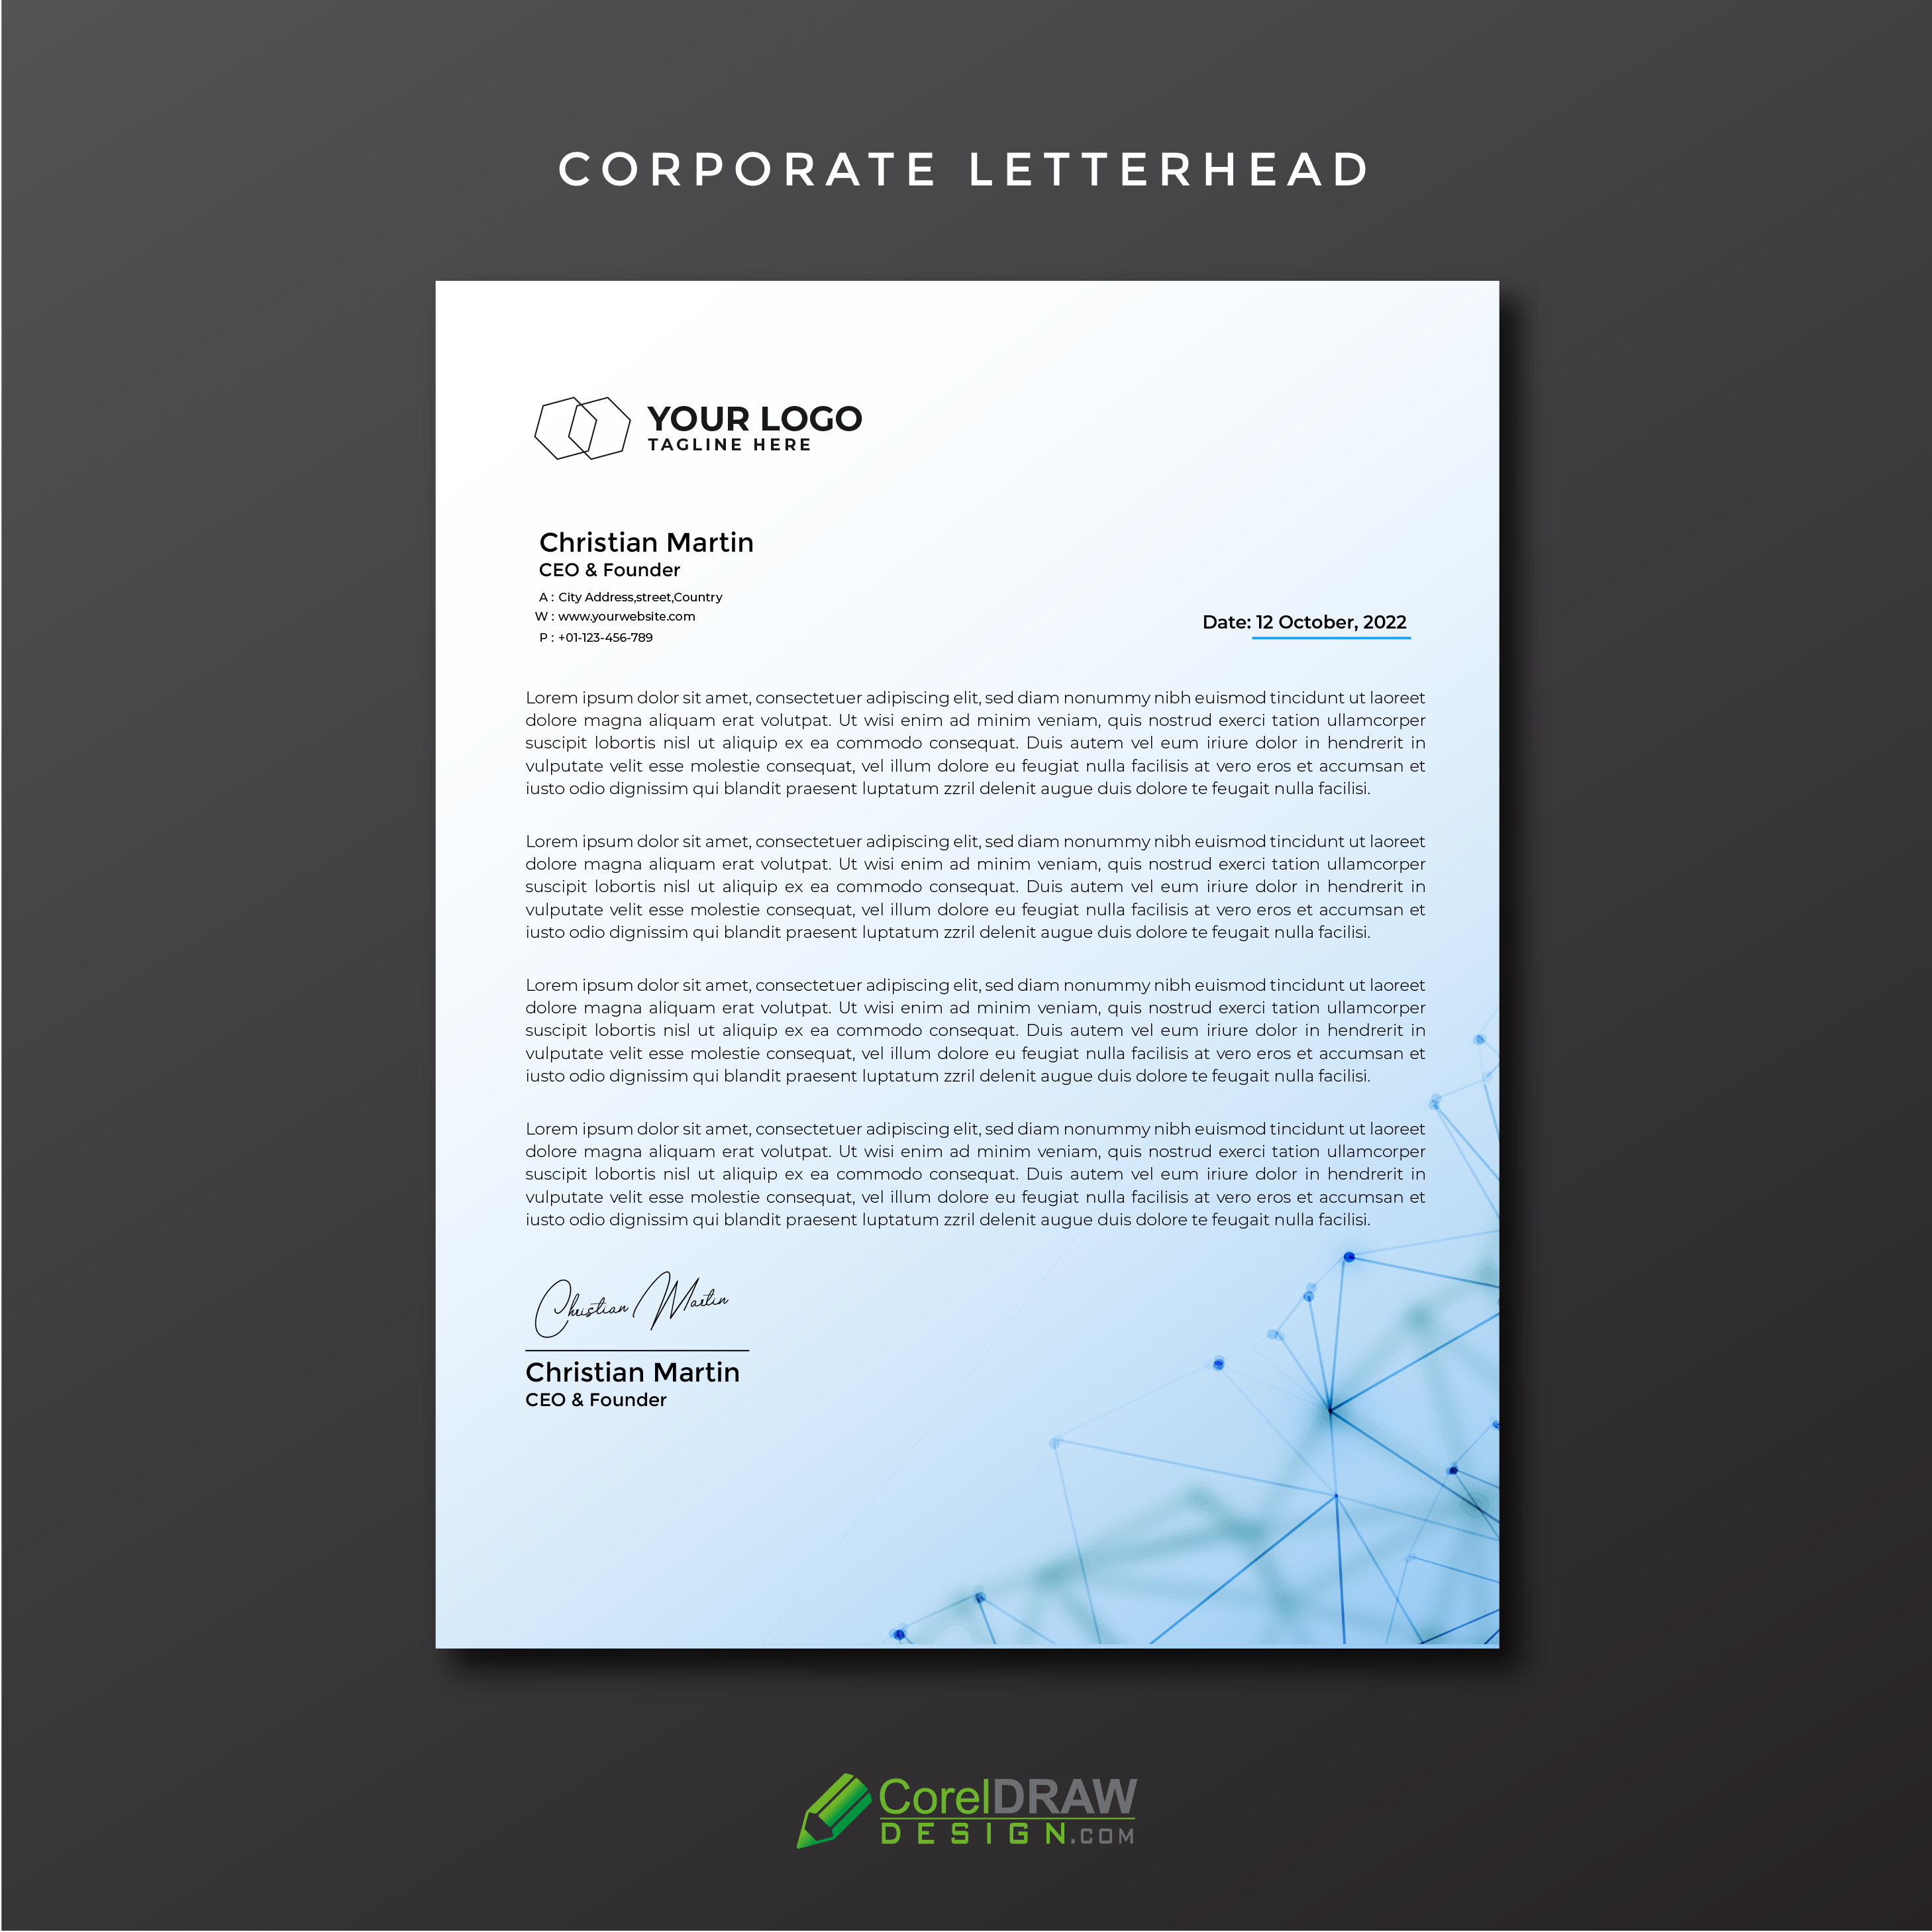 Professional Company Corporate letterhead